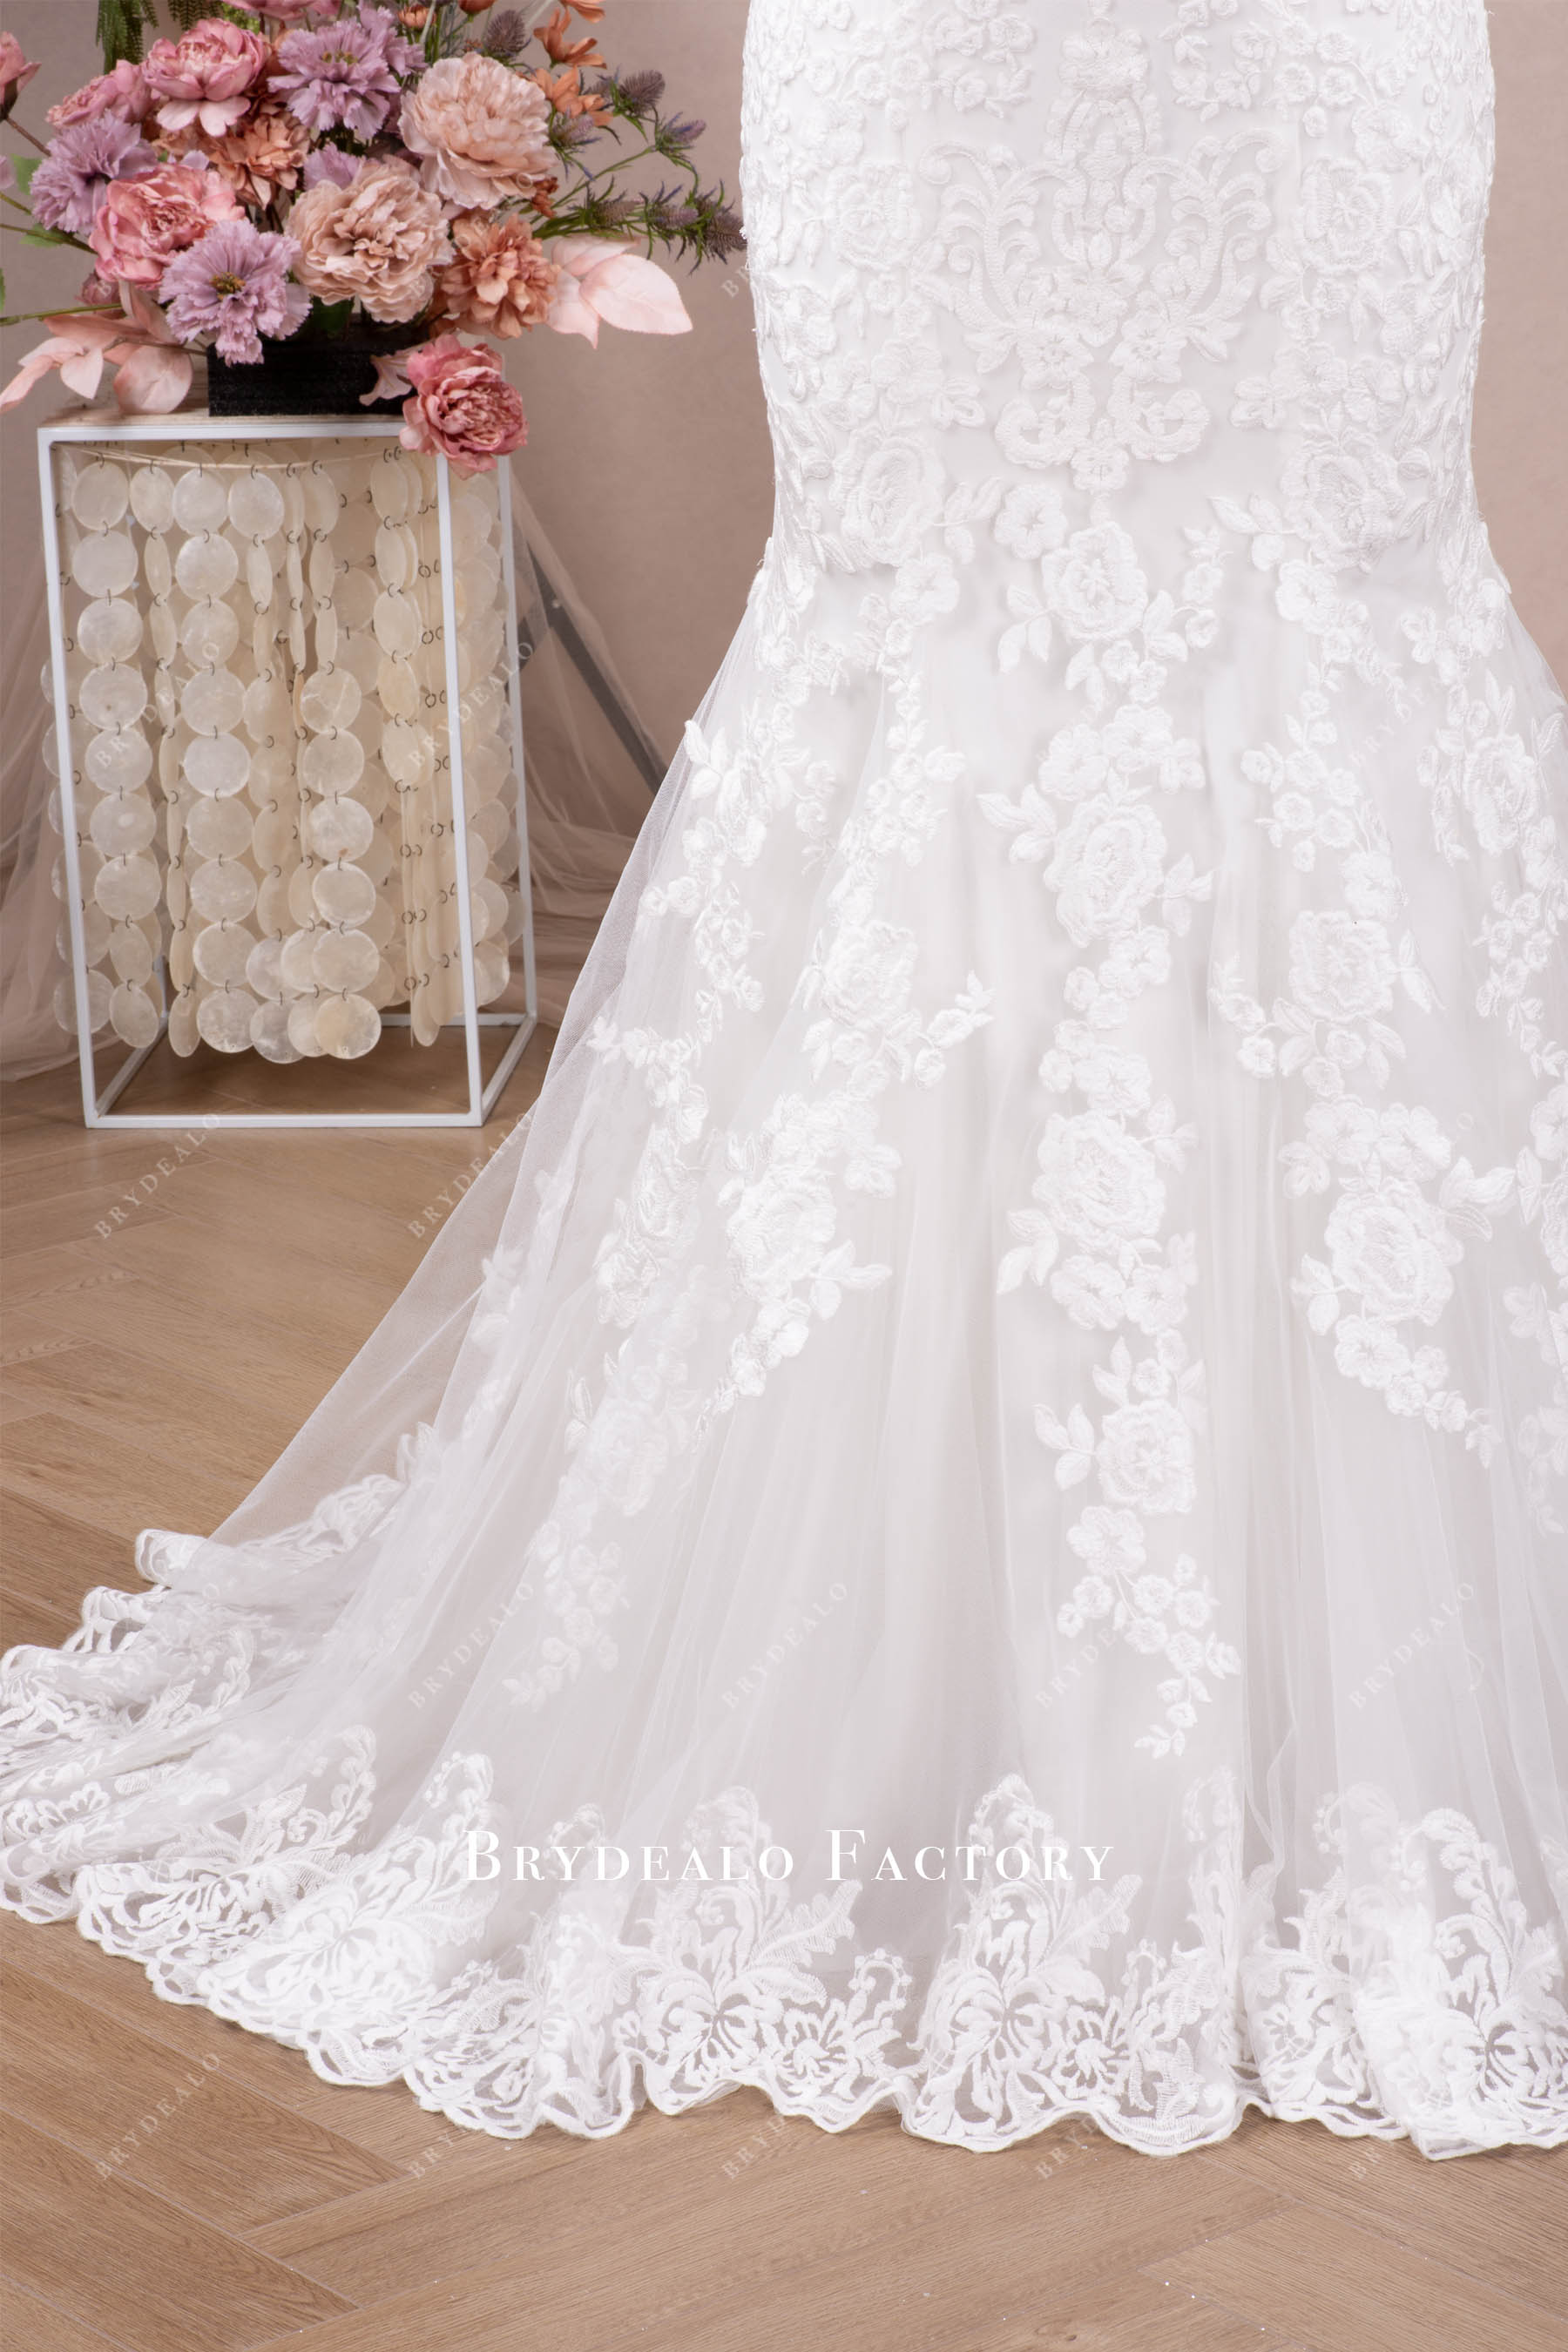 lace trim skirt wedding dress